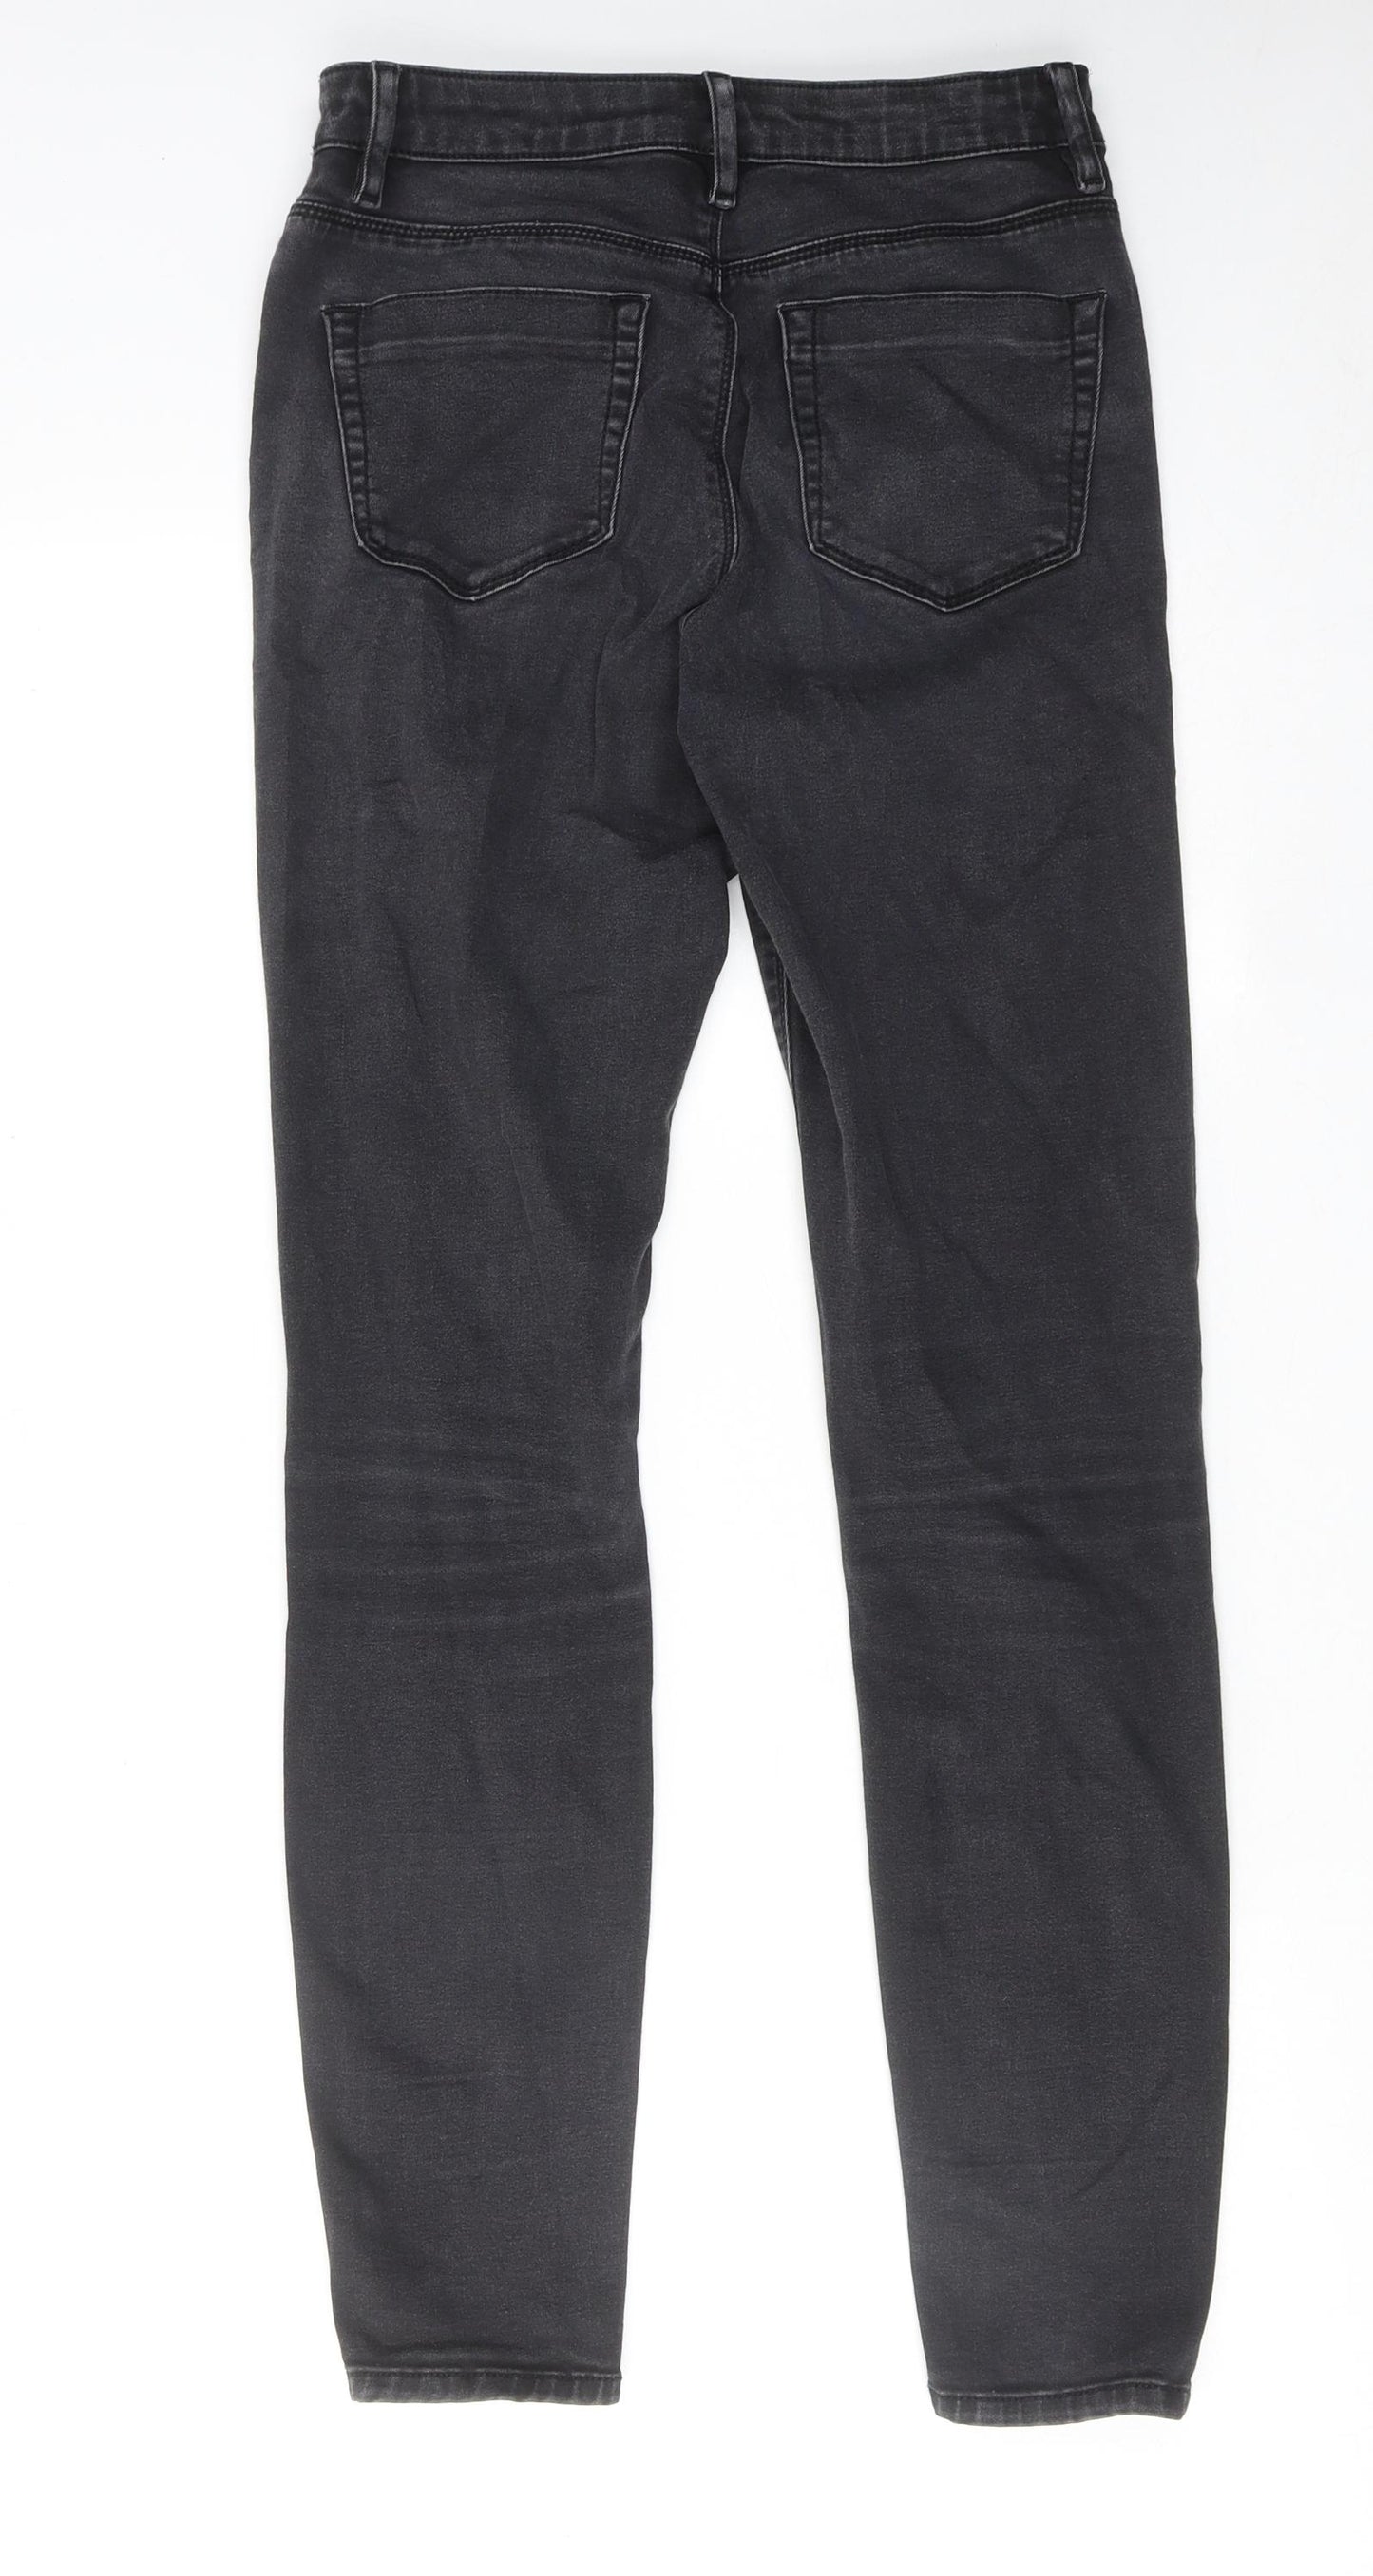 ASOS Womens Black Cotton Skinny Jeans Size 28 in L34 in Regular Zip